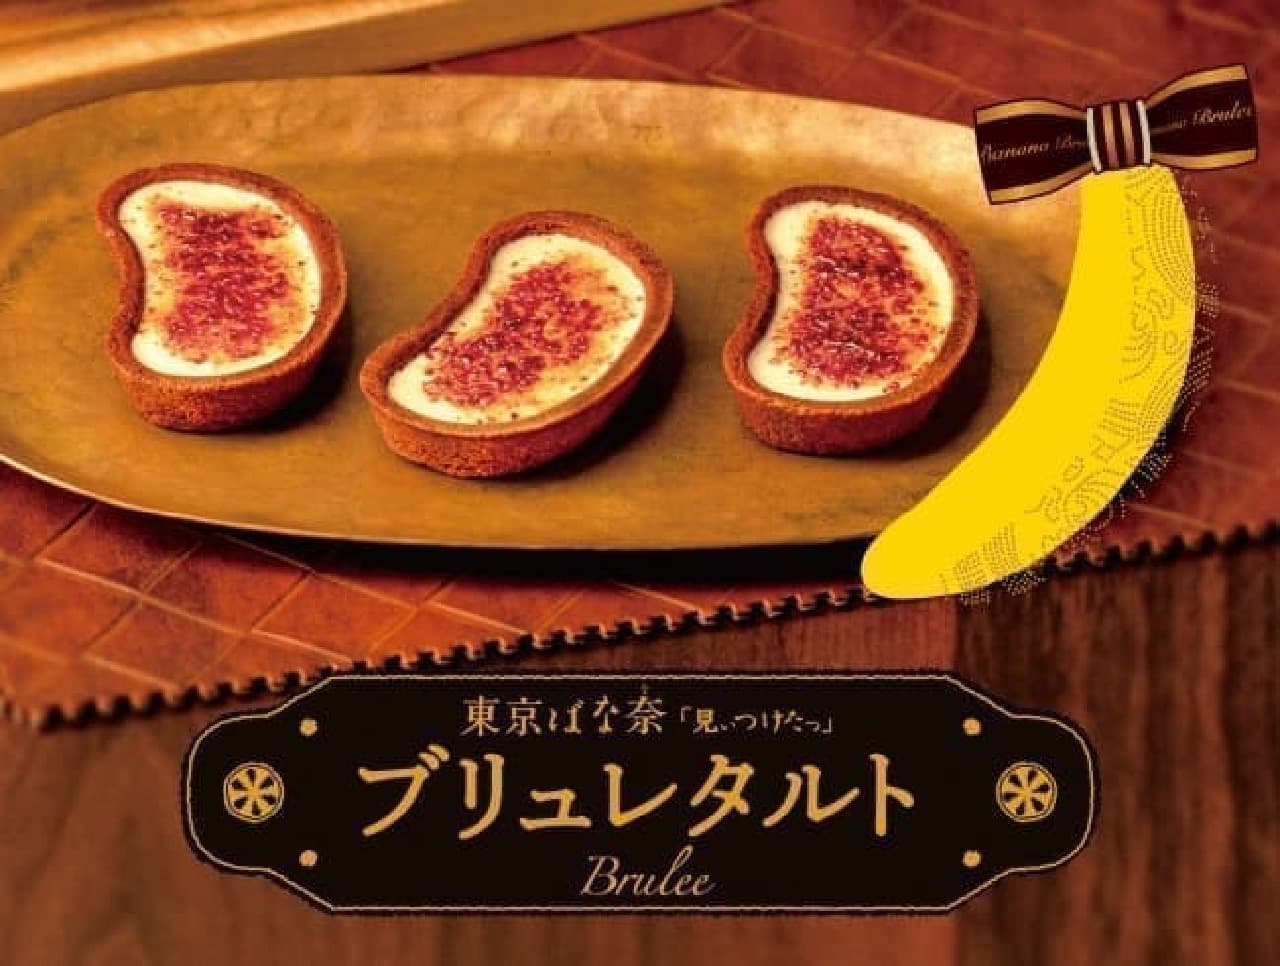 Tokyo Banana "Mitsuketta" Brulet Tart